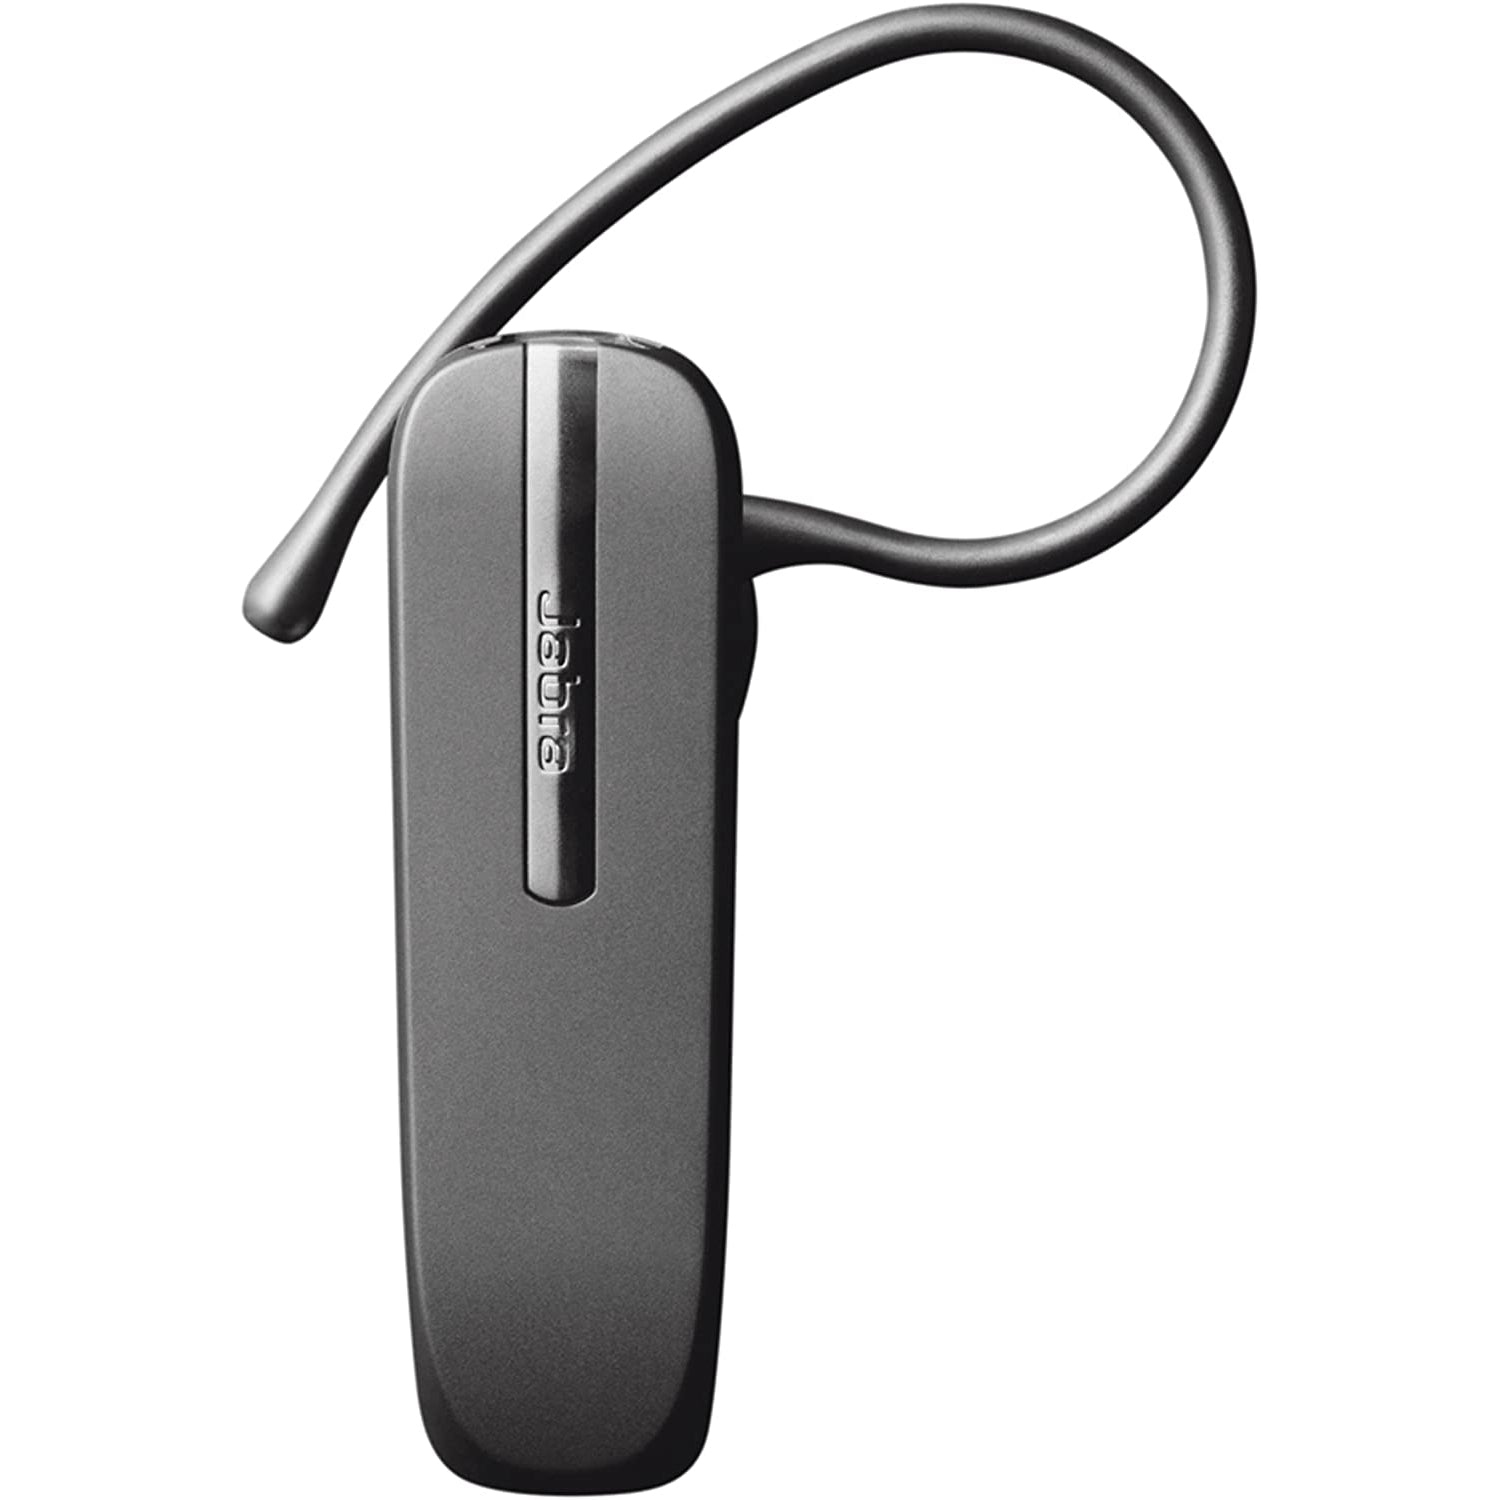 Jabra BT2046 Wireless Bluetooth Headset - Black